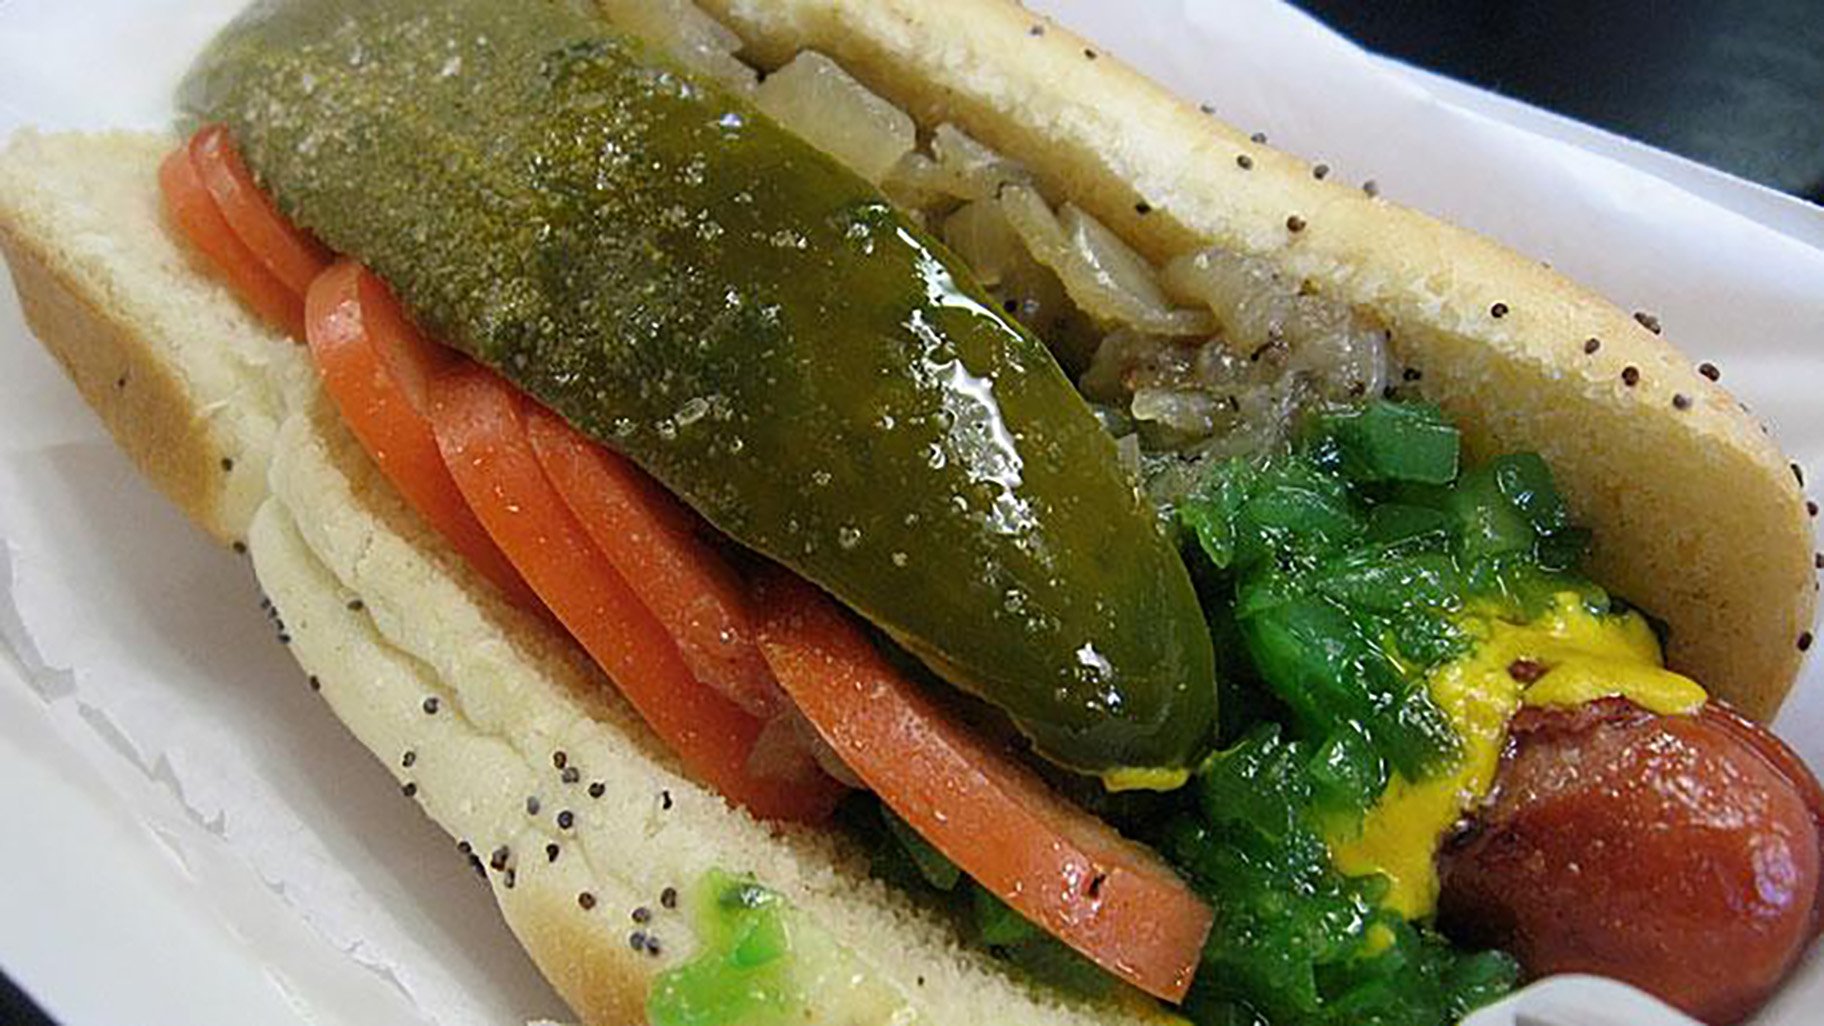 Chicago-style hot dog (WTTW)